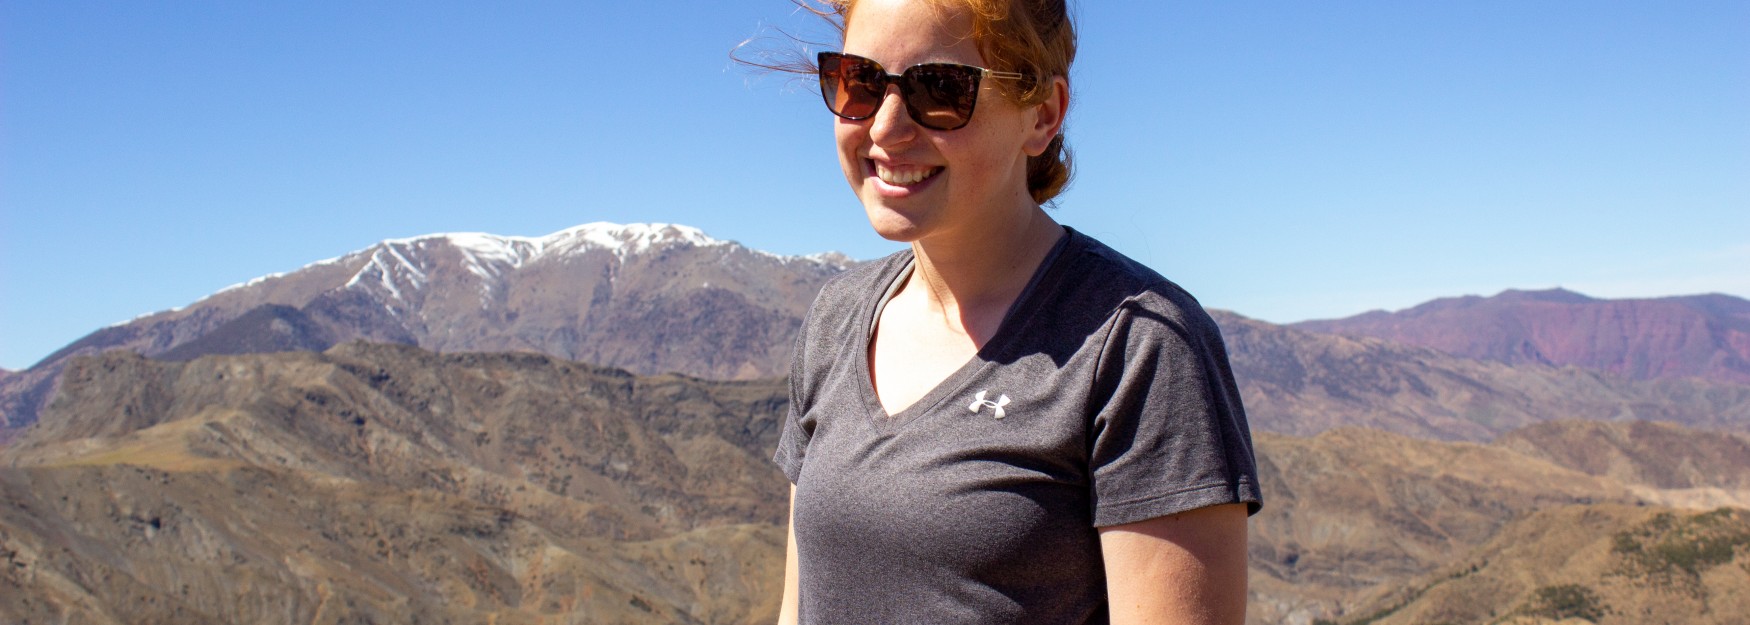 Rebecca Kryceski stands against a backdrop of the Sahara Desert